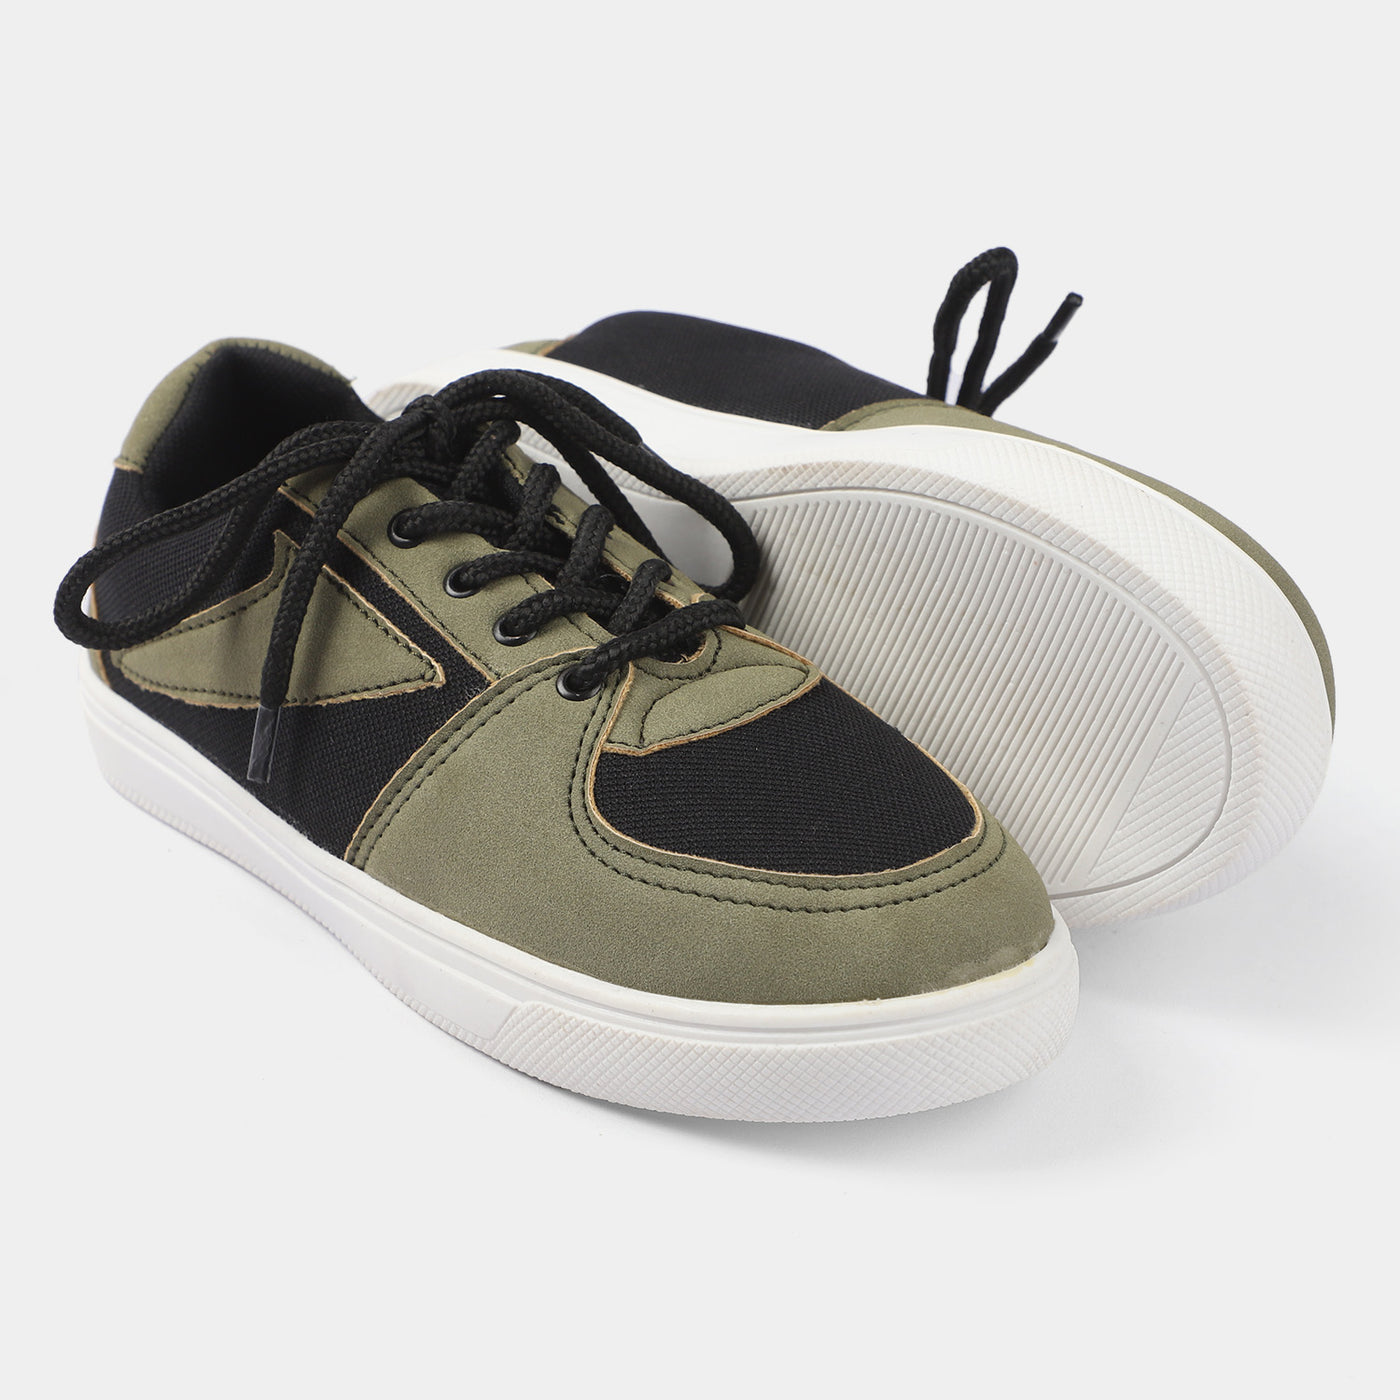 Boys Sneakers 203-56-Green/BlacK